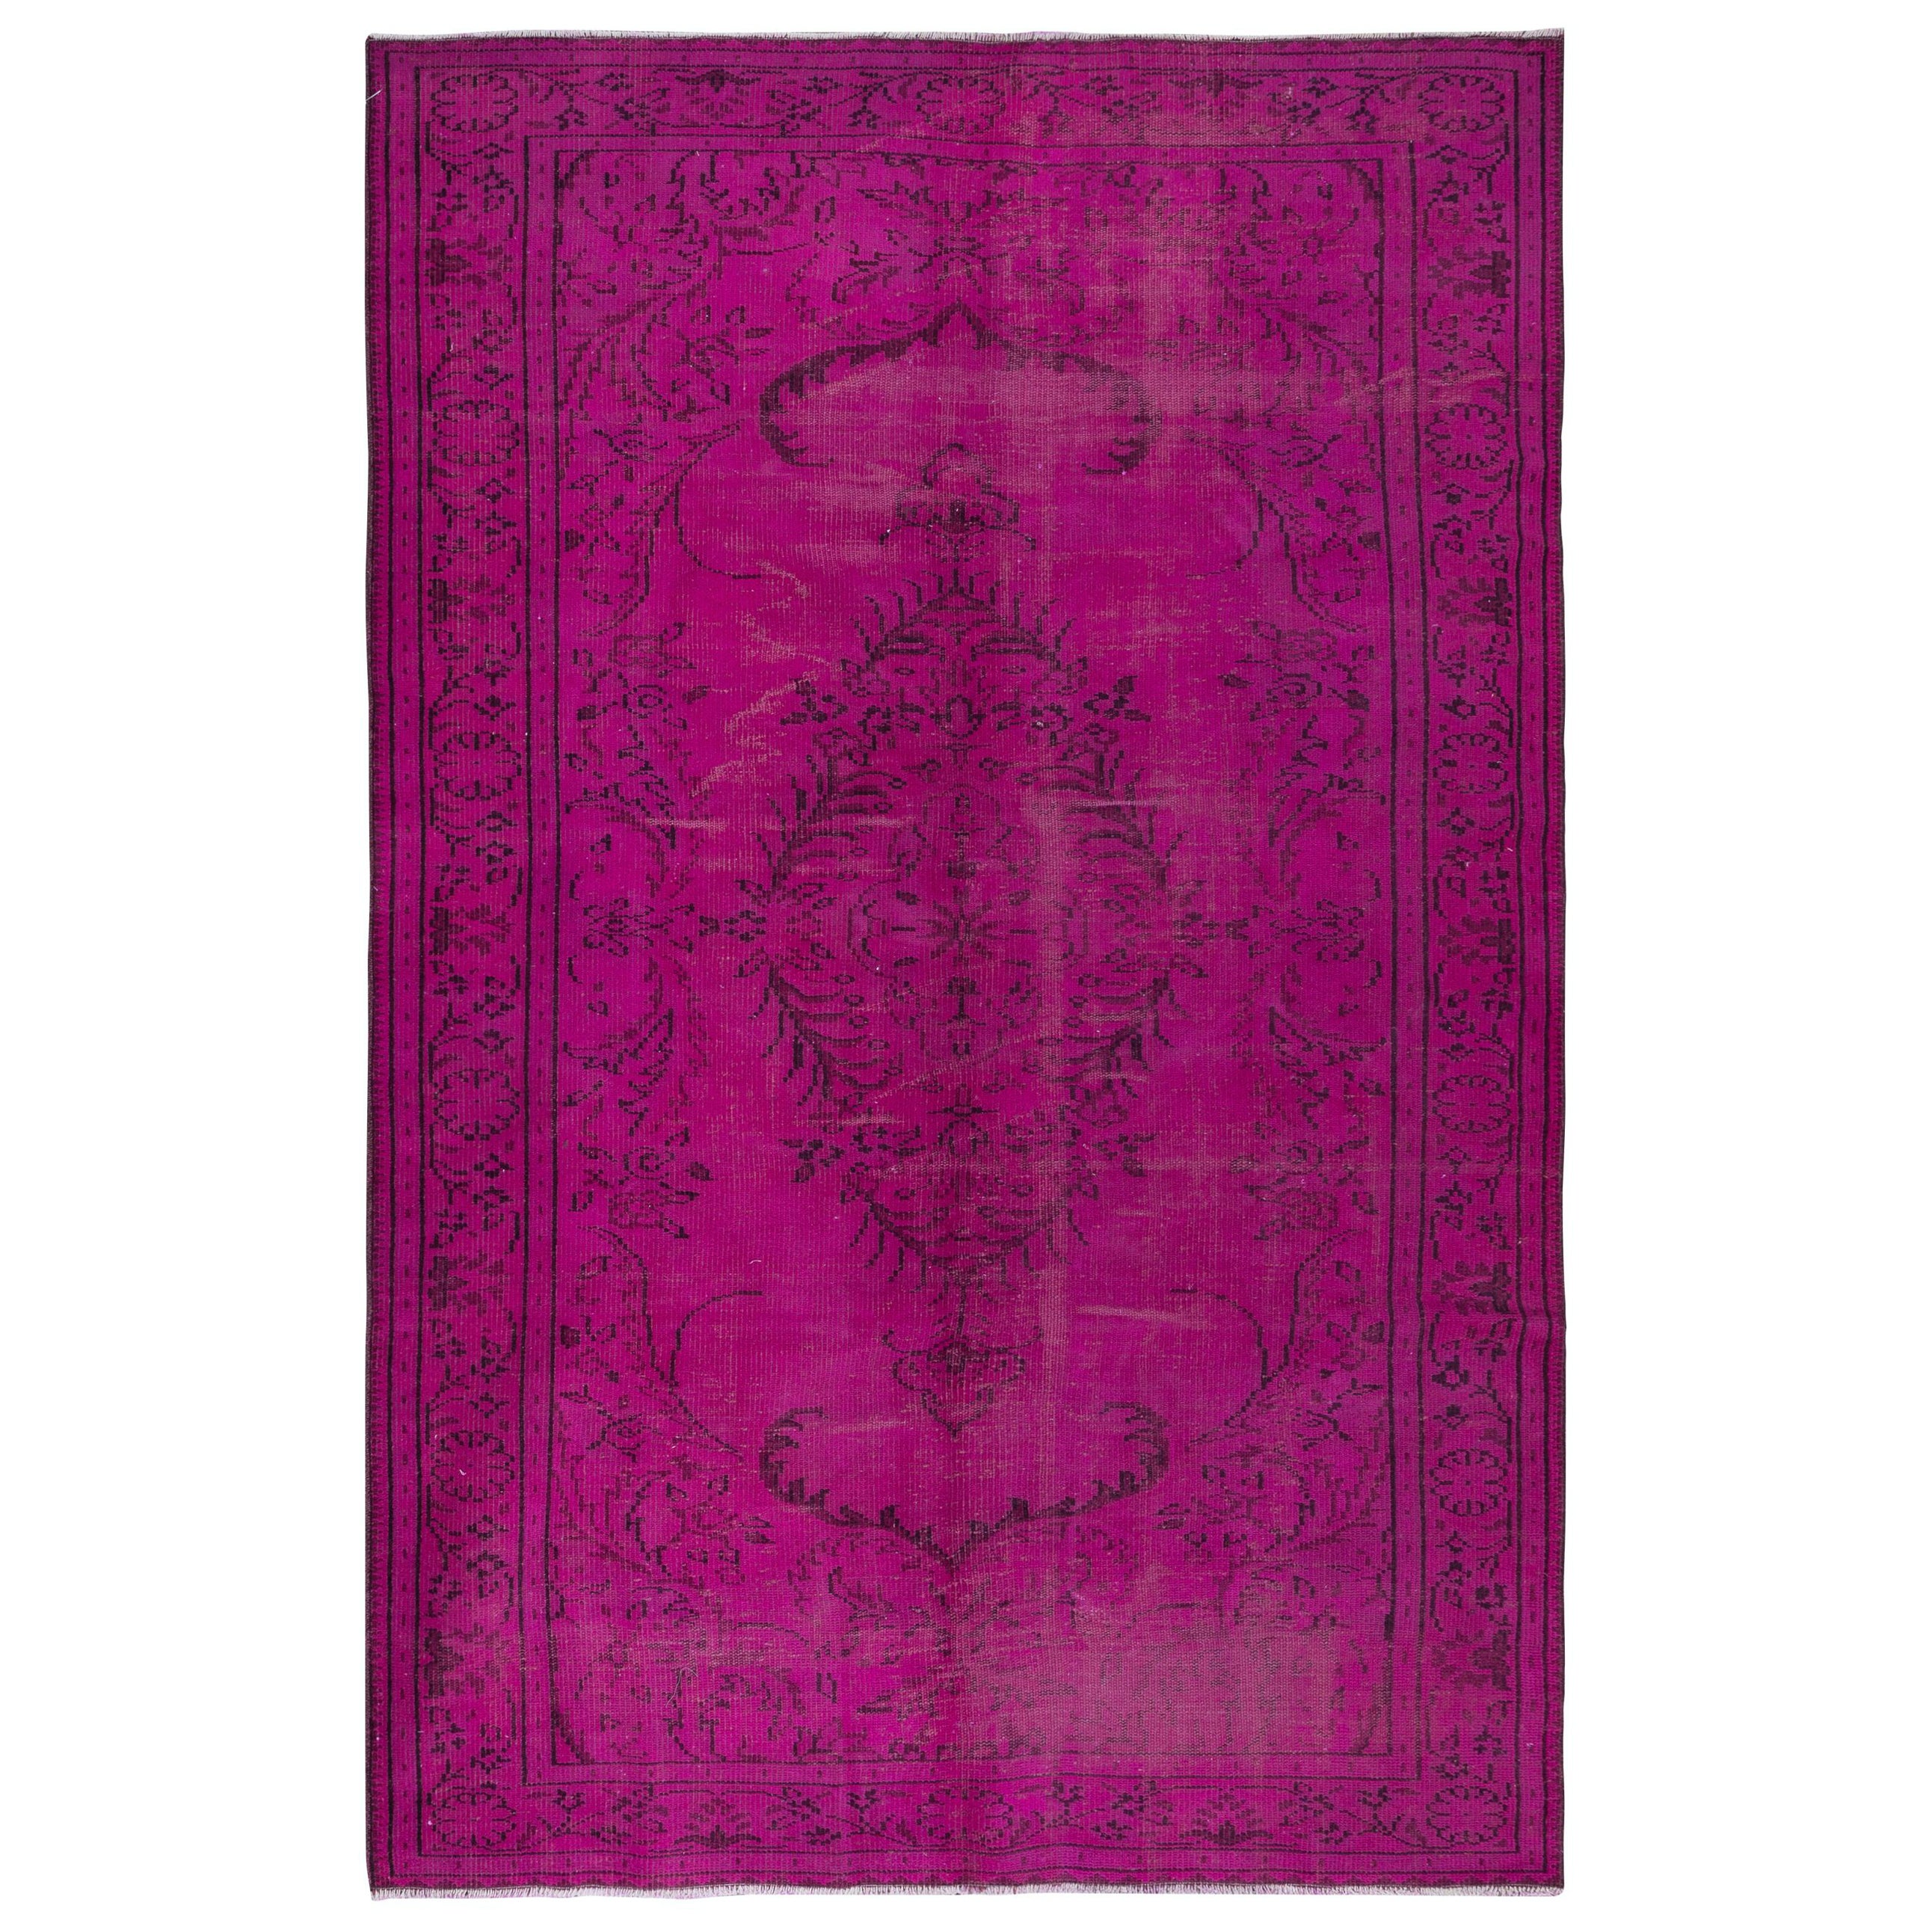 6x9.2 Ft Modern & Contemporary Rug in Pink, Handmade Turkish Wool Carpet